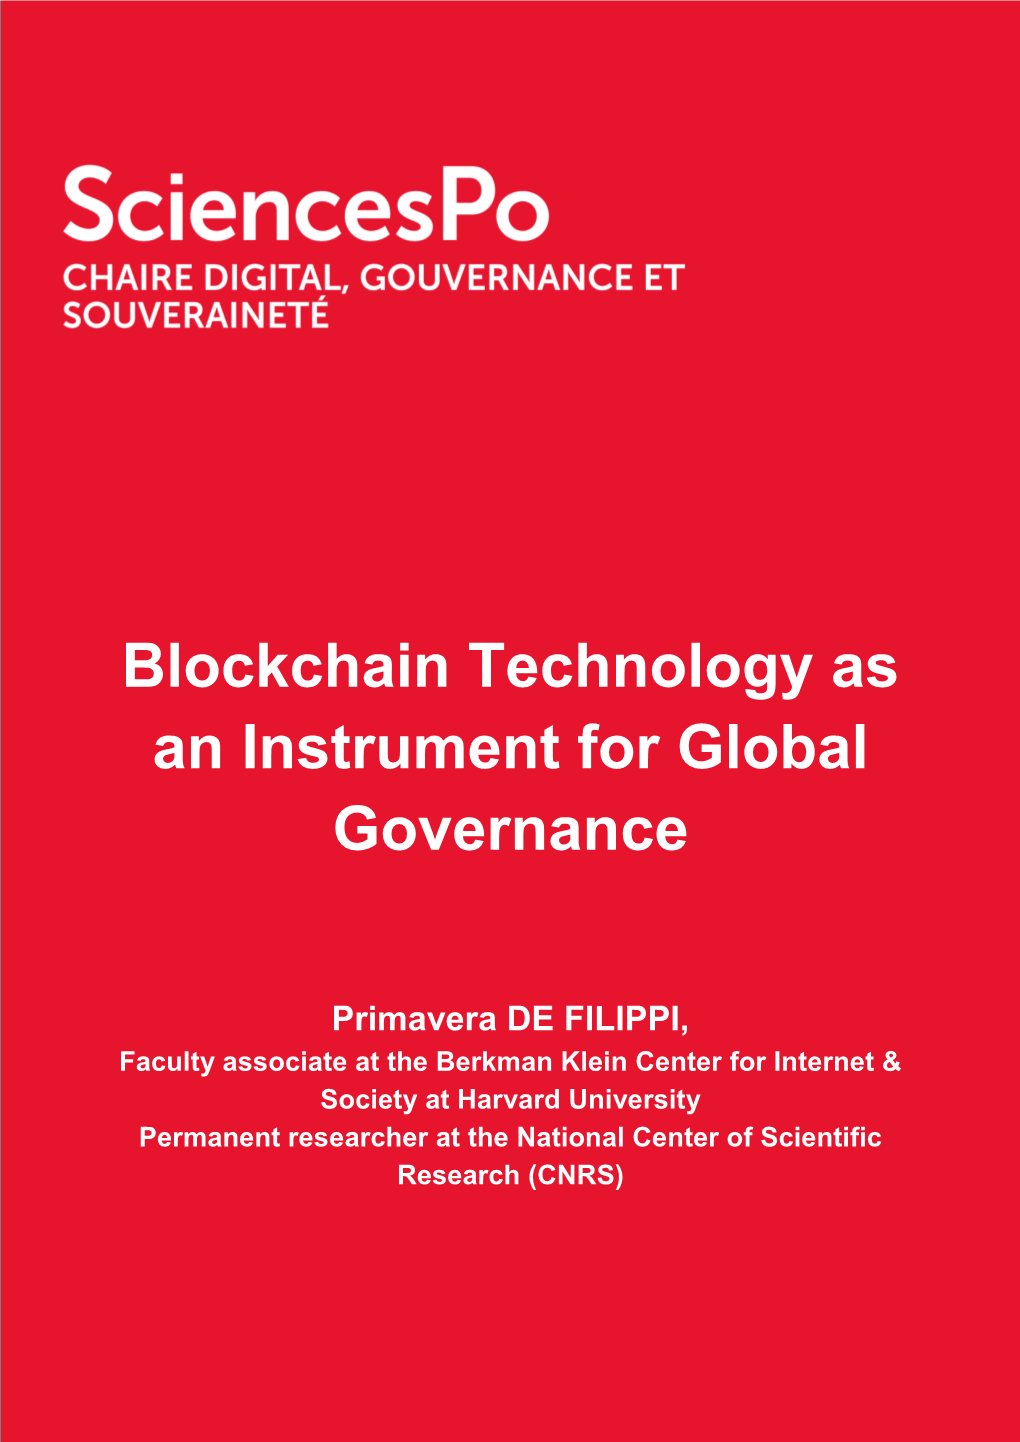 Blockchain Technology As an Instrument for Global Governance